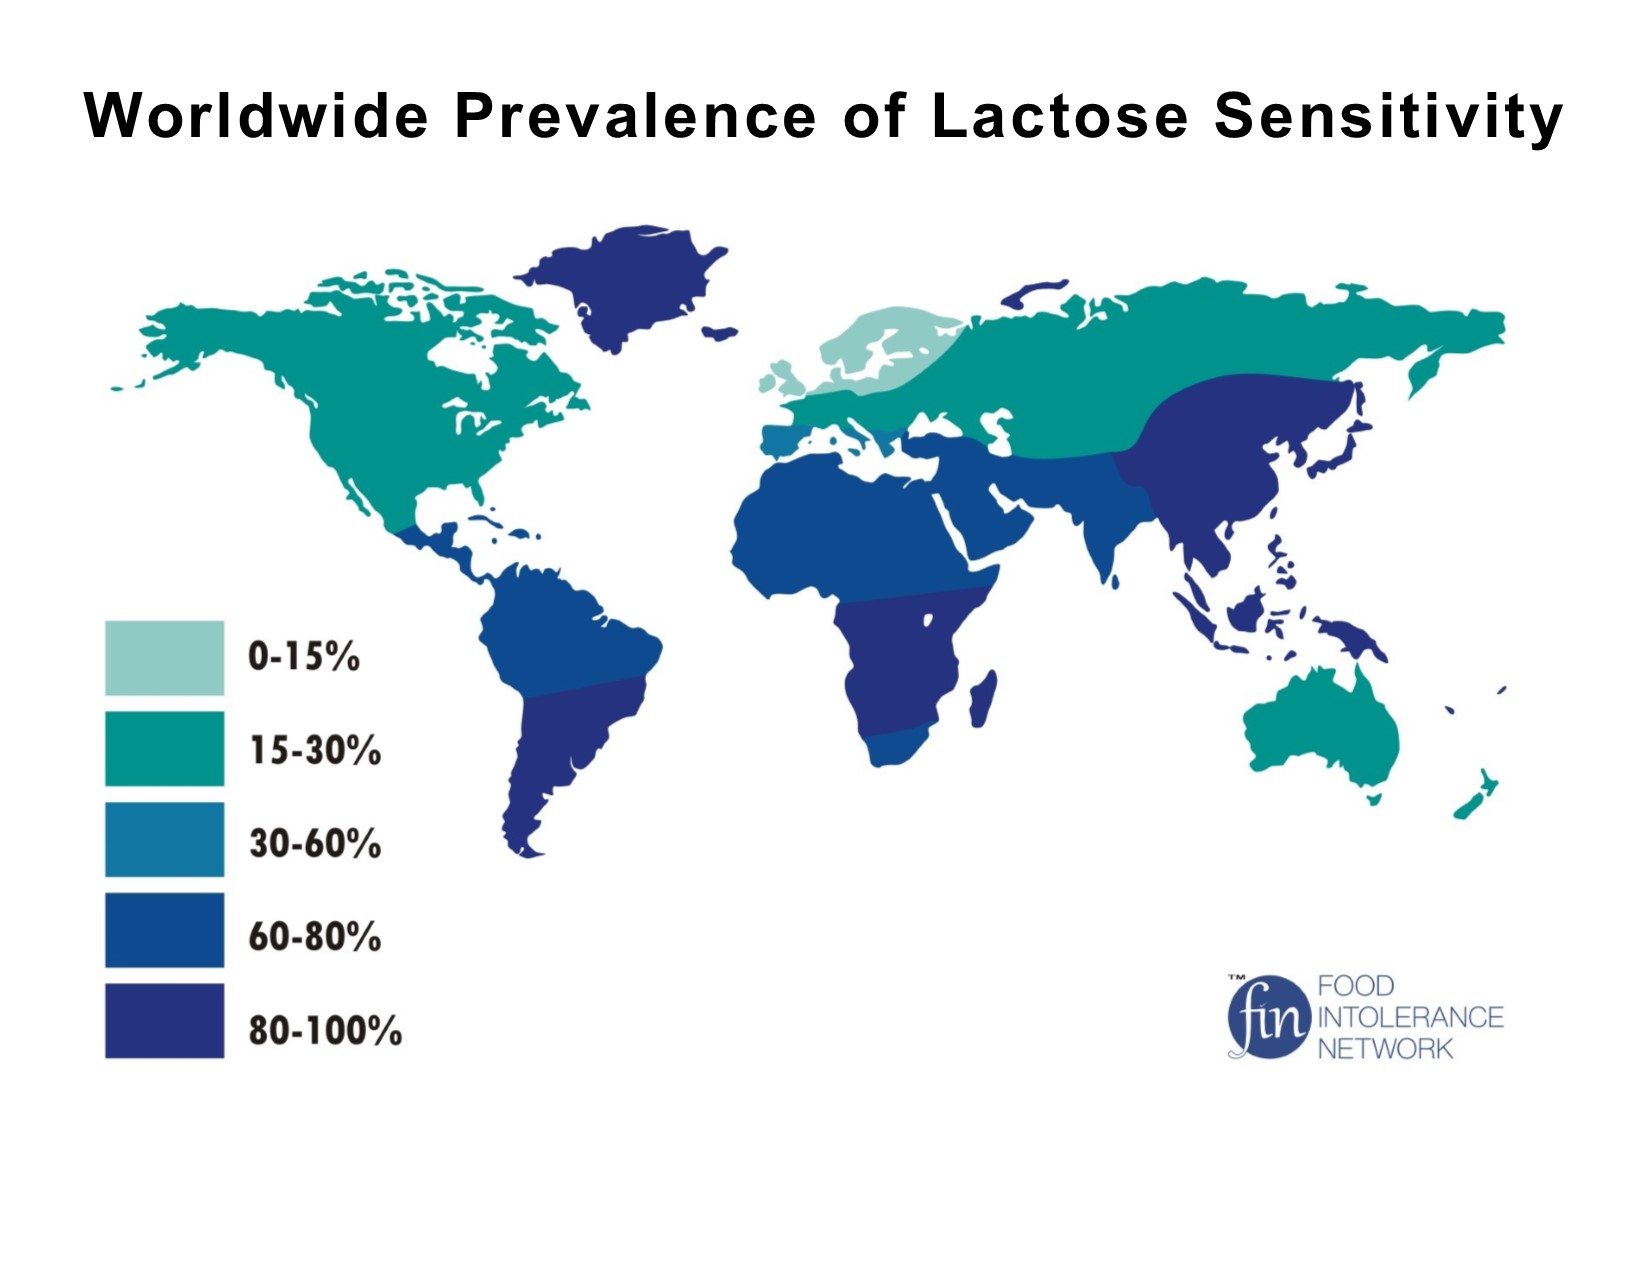 Prevalence of Lactose Sensitivity